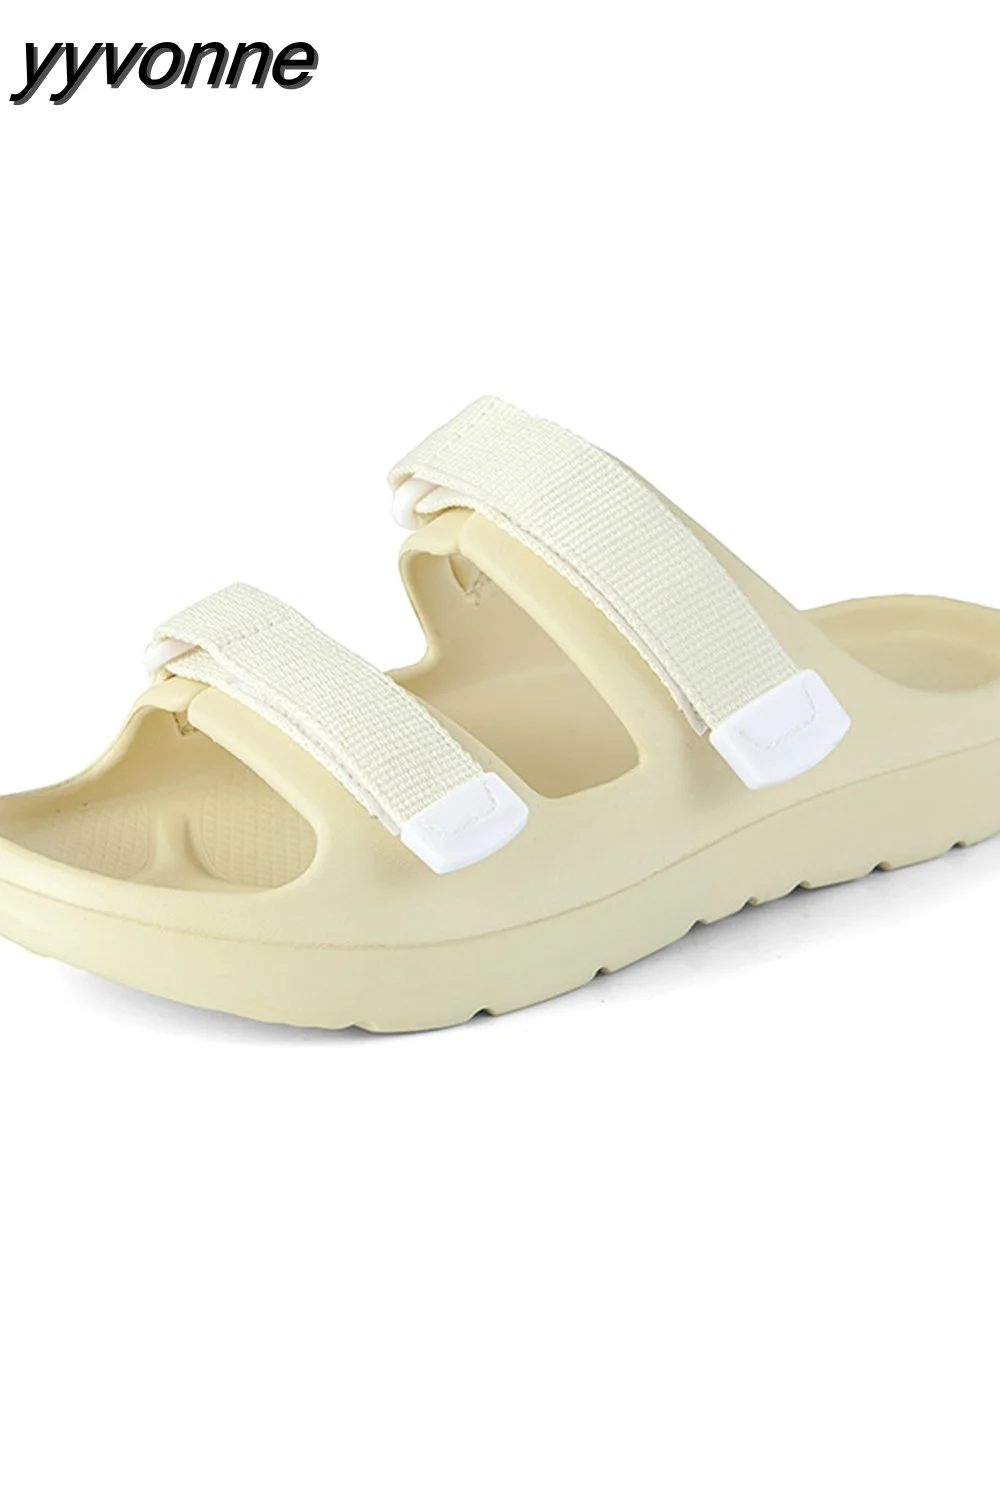 yyvonne Summer Fashion Men Light EVA Outside Slippers Casual Solid Color Waterproof Non-slip Indoor Home Slides Shoe